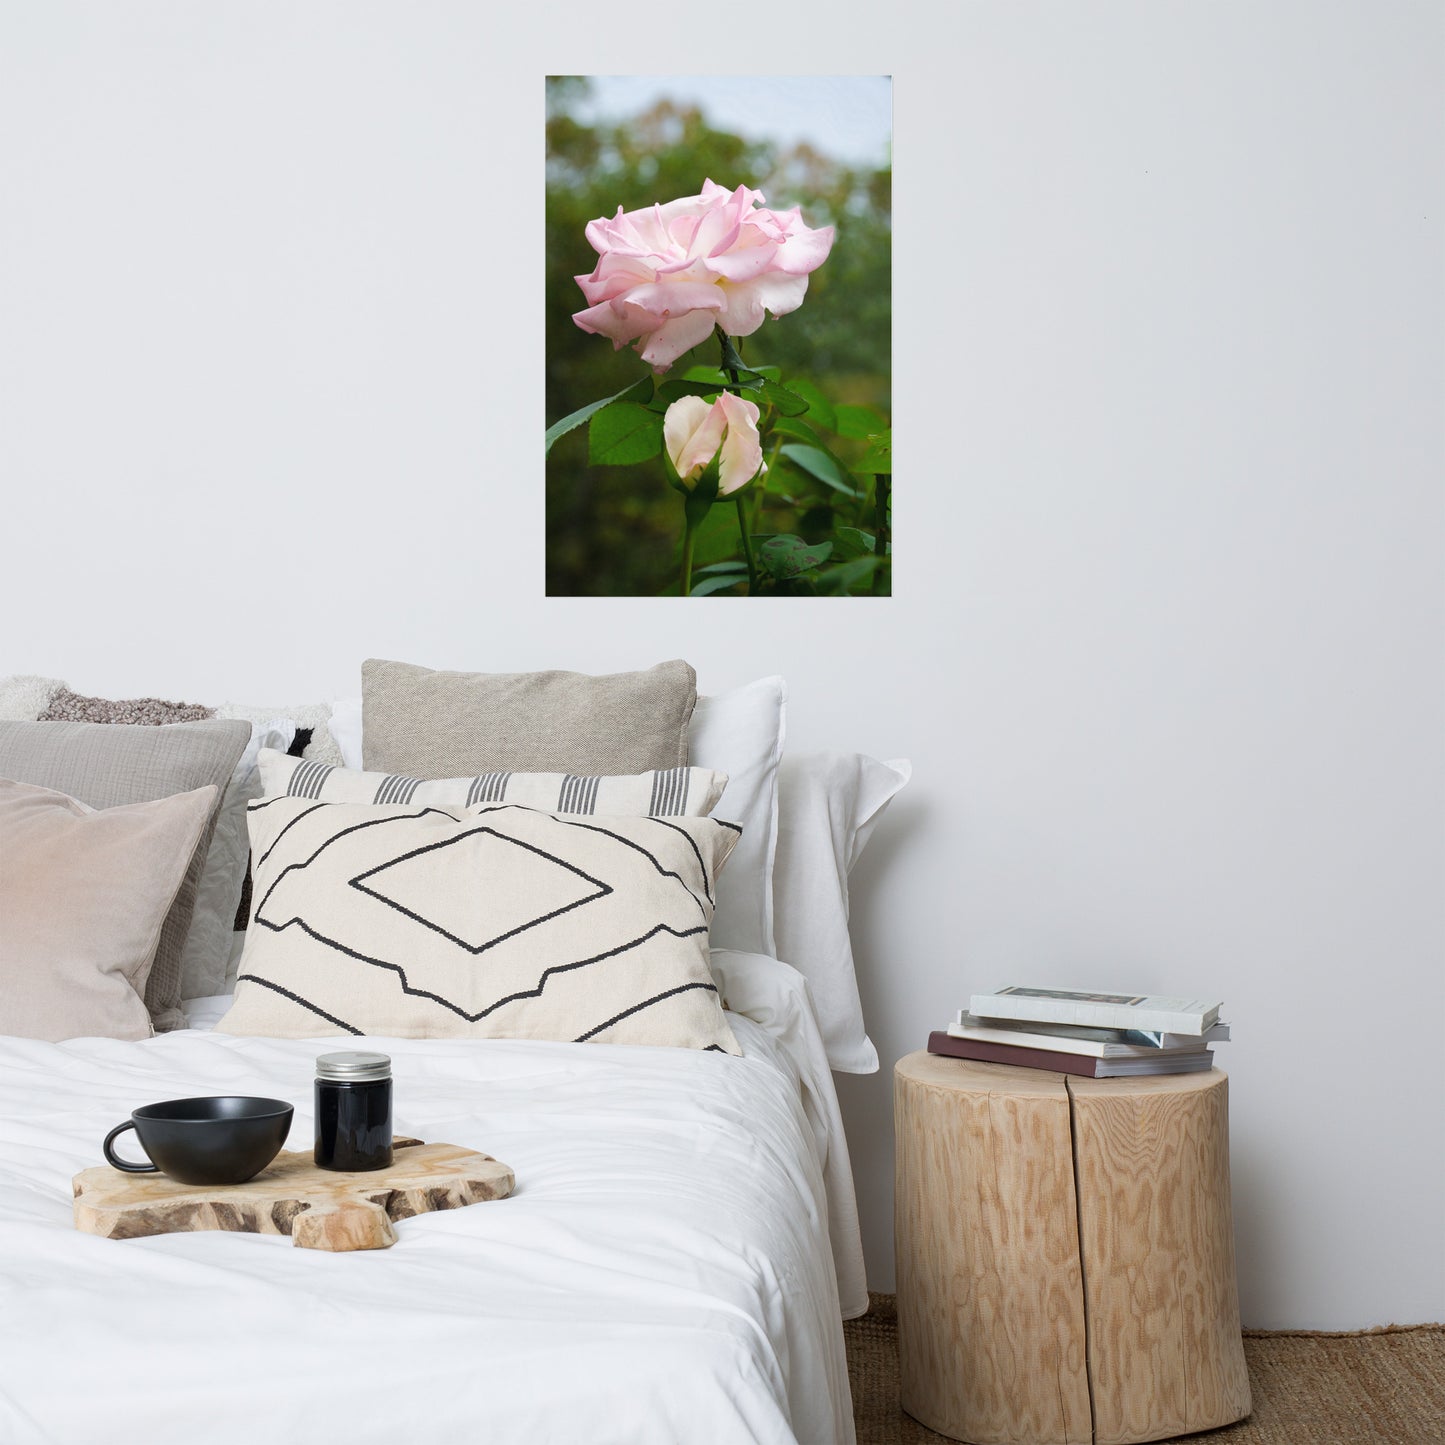 Floral Art Posters: Admiration Rose - Botanical / Floral / Flora / Flowers / Nature Photograph Loose / Unframed / Frameless / Frameable Wall Art Print - Artwork